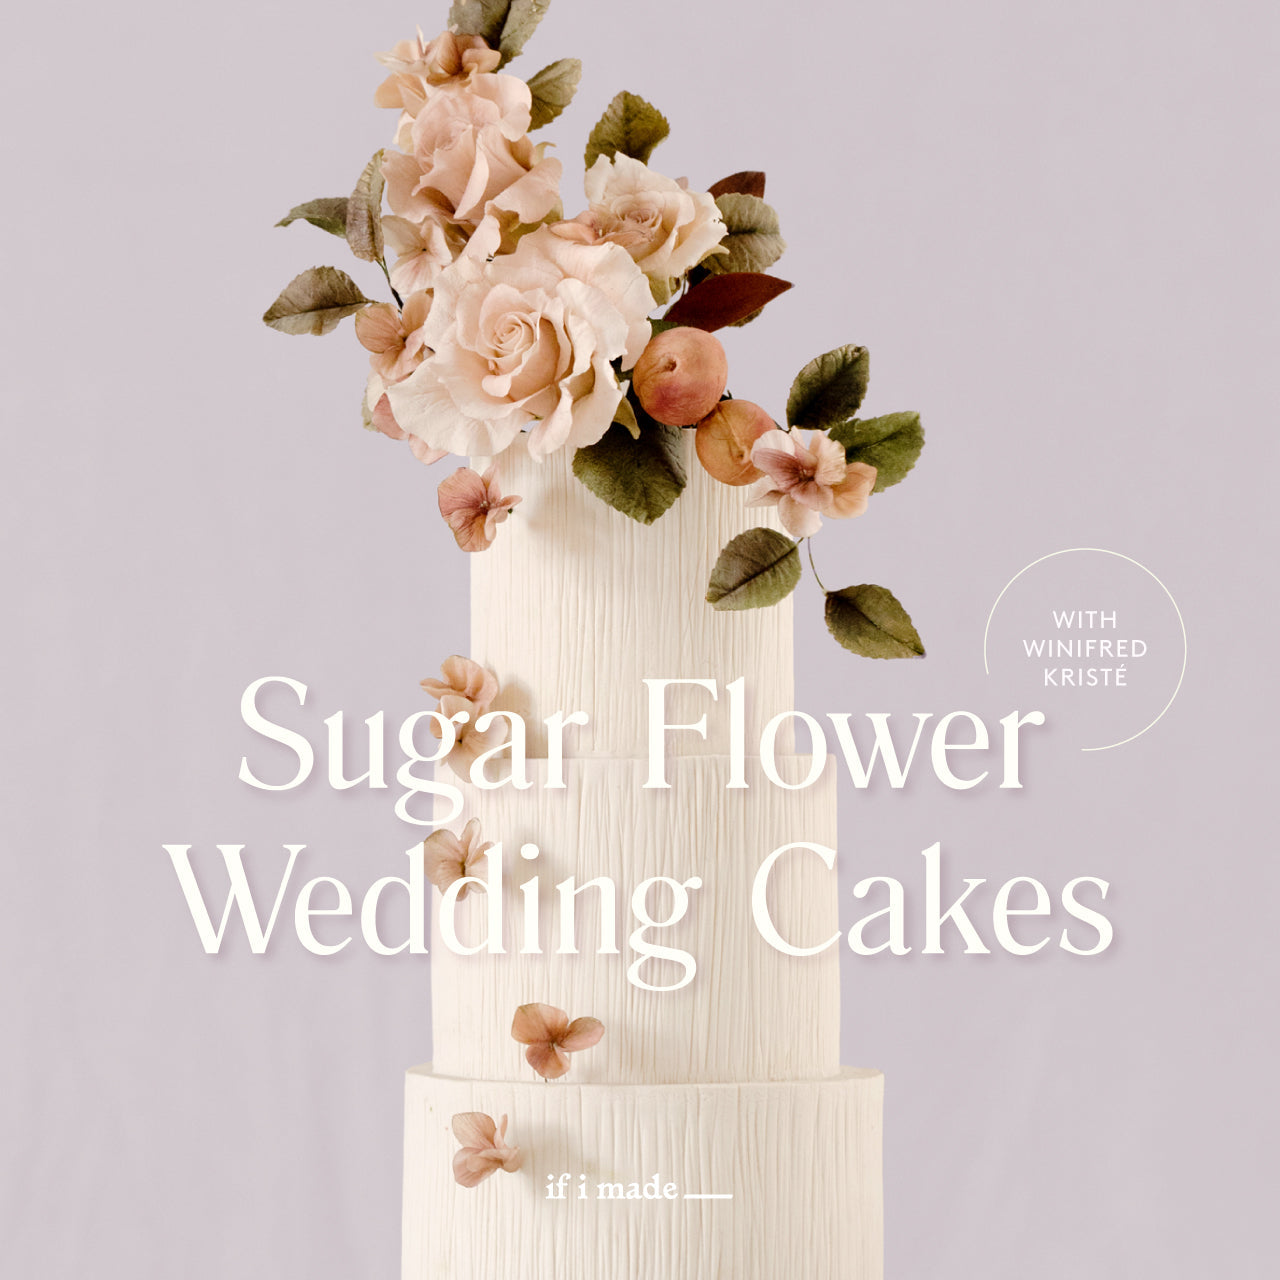 Sugar Flower Wedding Cakes with Winifred Kriste (SOP0722)